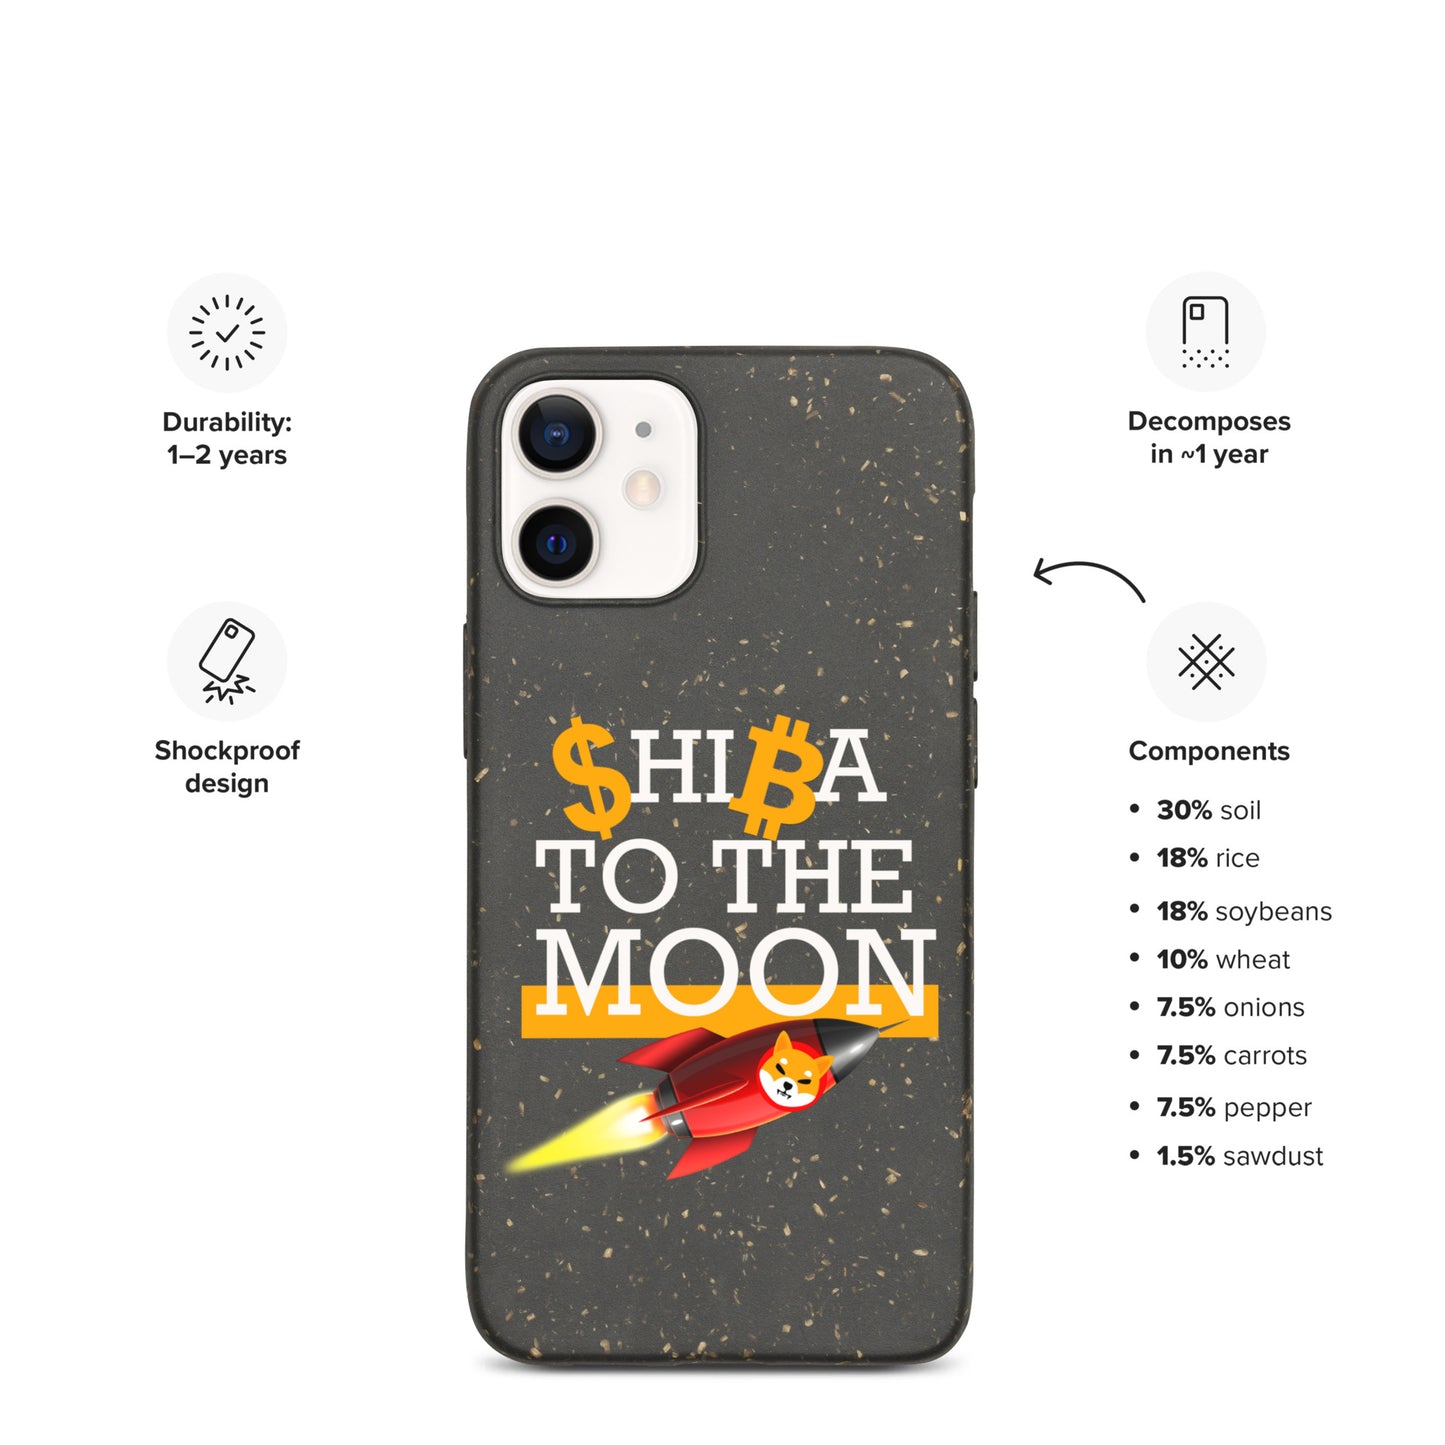 SHIBA TO THE MOON iPhone Case - biologisch abbaubar